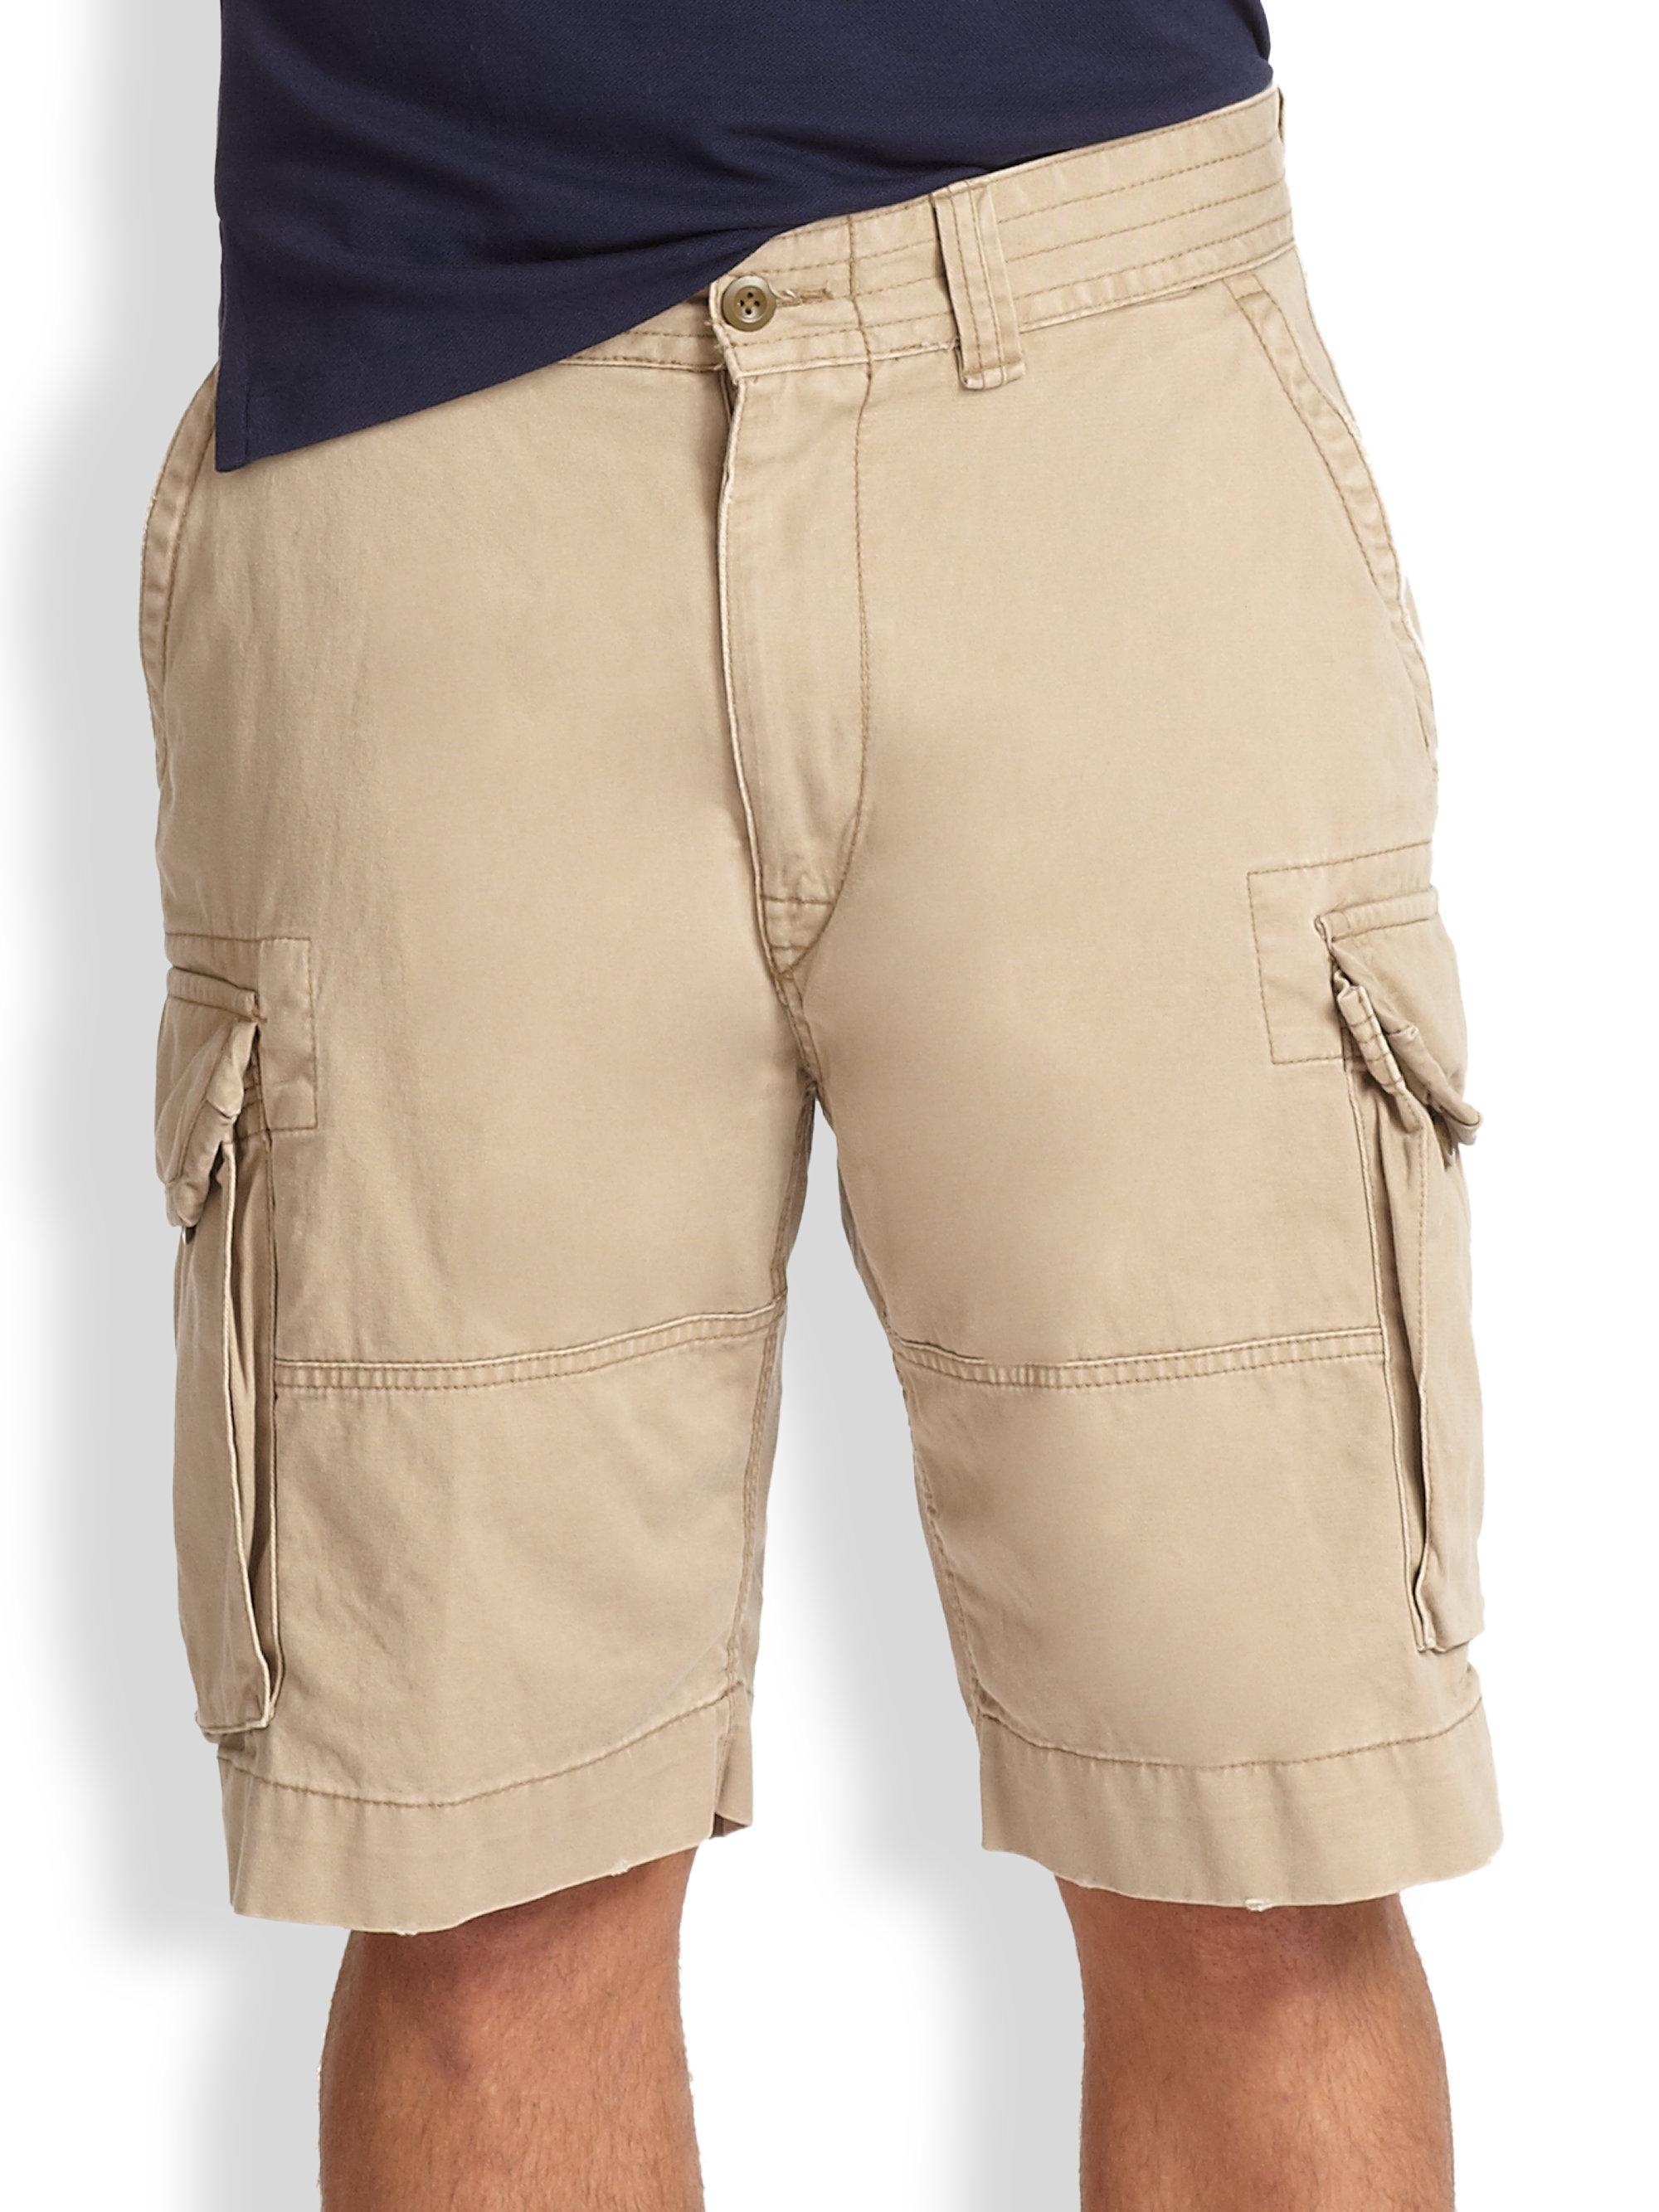 Lyst - Polo ralph lauren Gellar Classic Cargo Shorts in Brown for Men